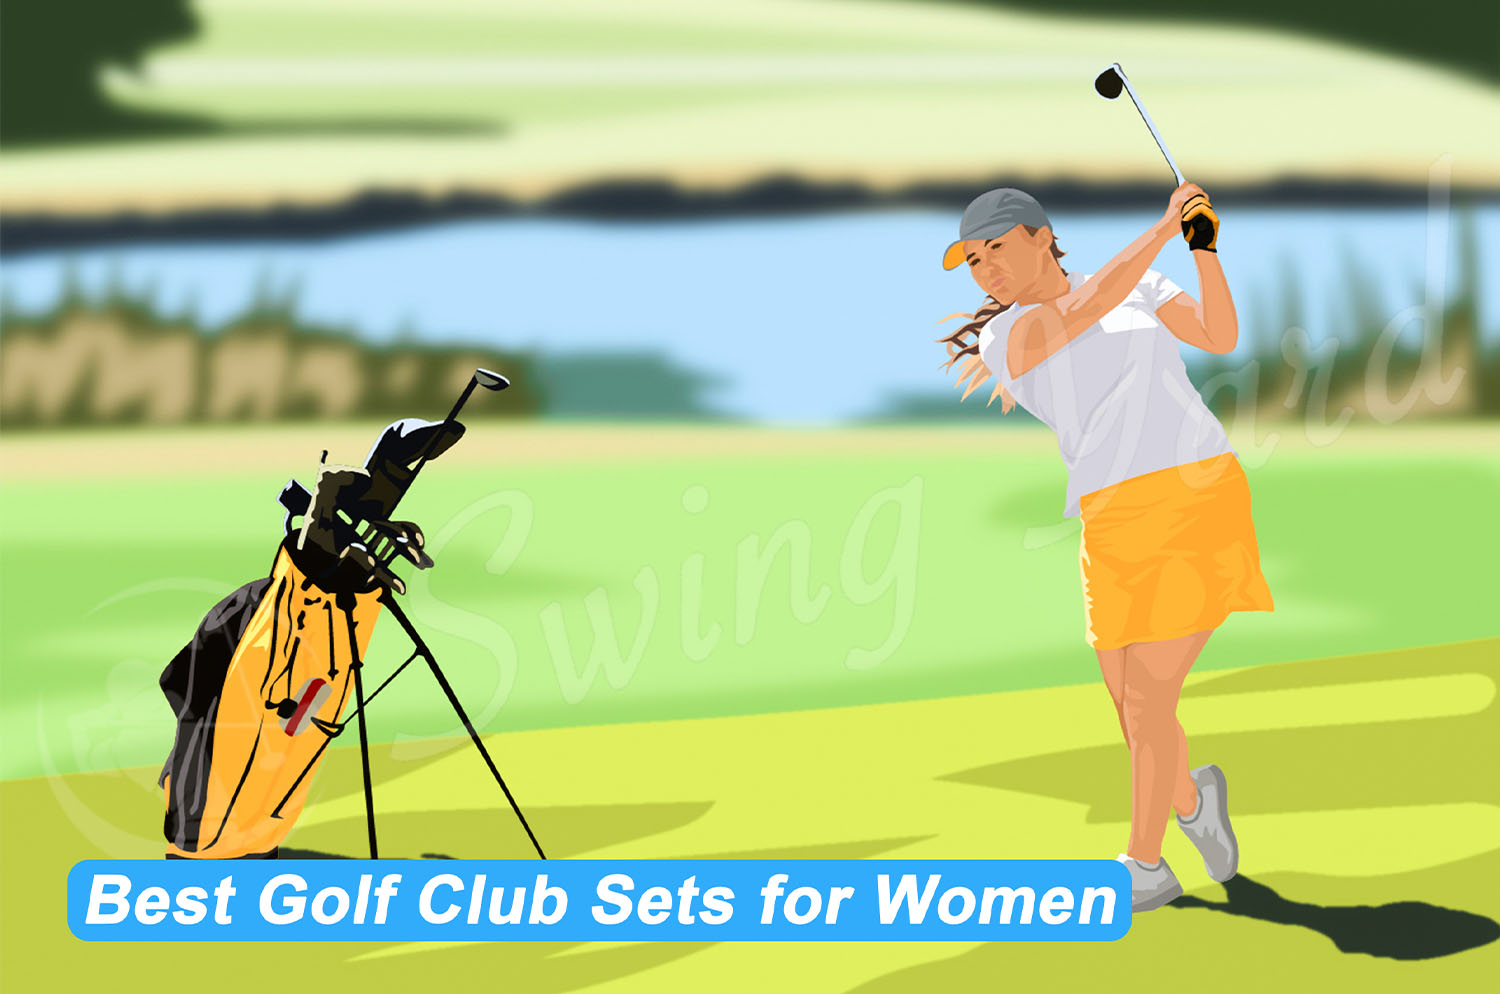 5 Best Women's Golf Clubs For Intermediate Players